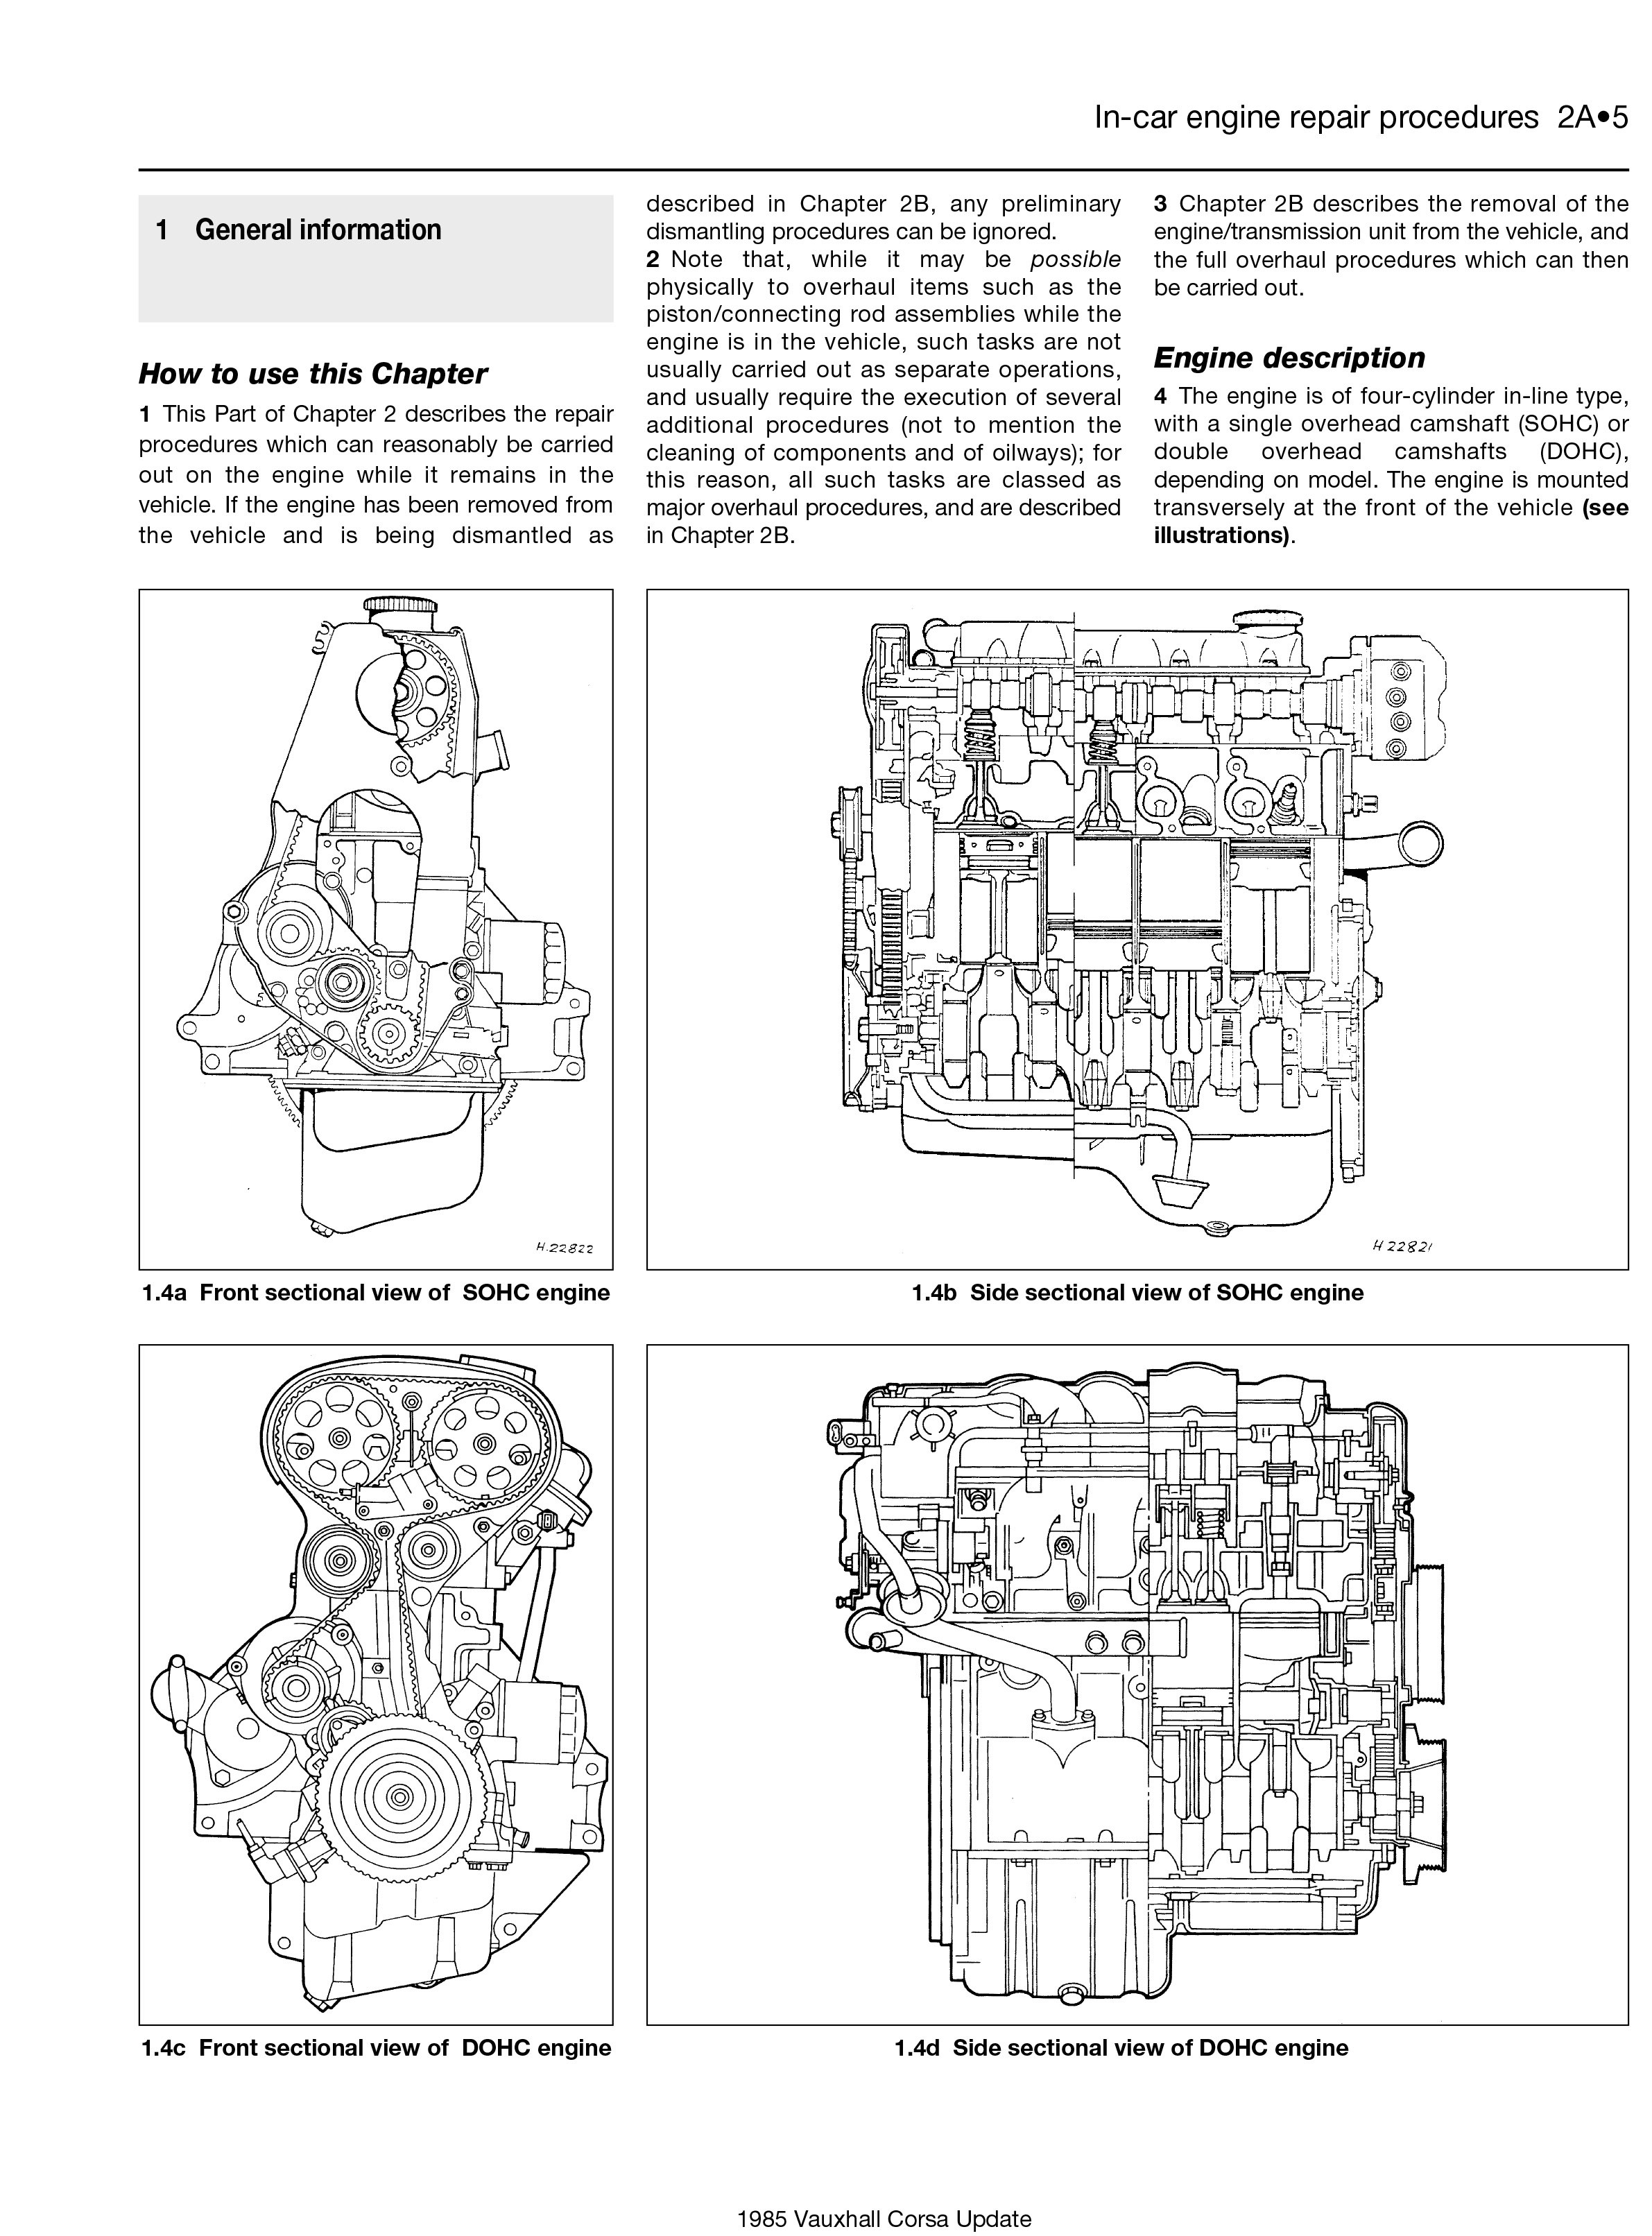 2001 Saturn Sl2 Dohc Engine Diagram